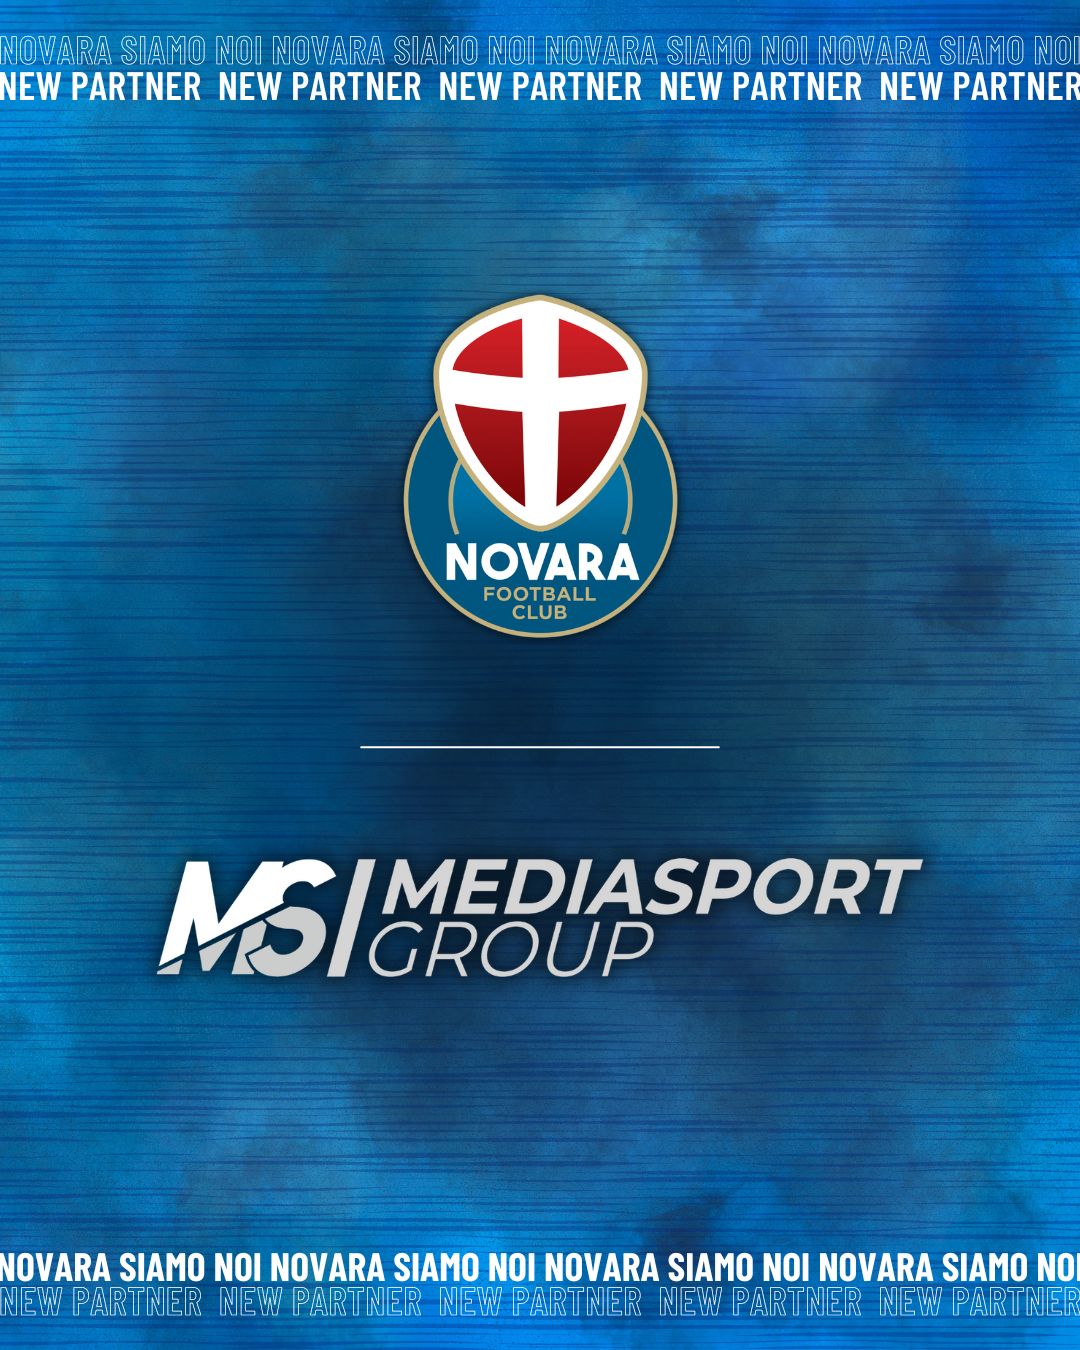 Read more about the article Mediasport Group nuovo media partner del Novara FC